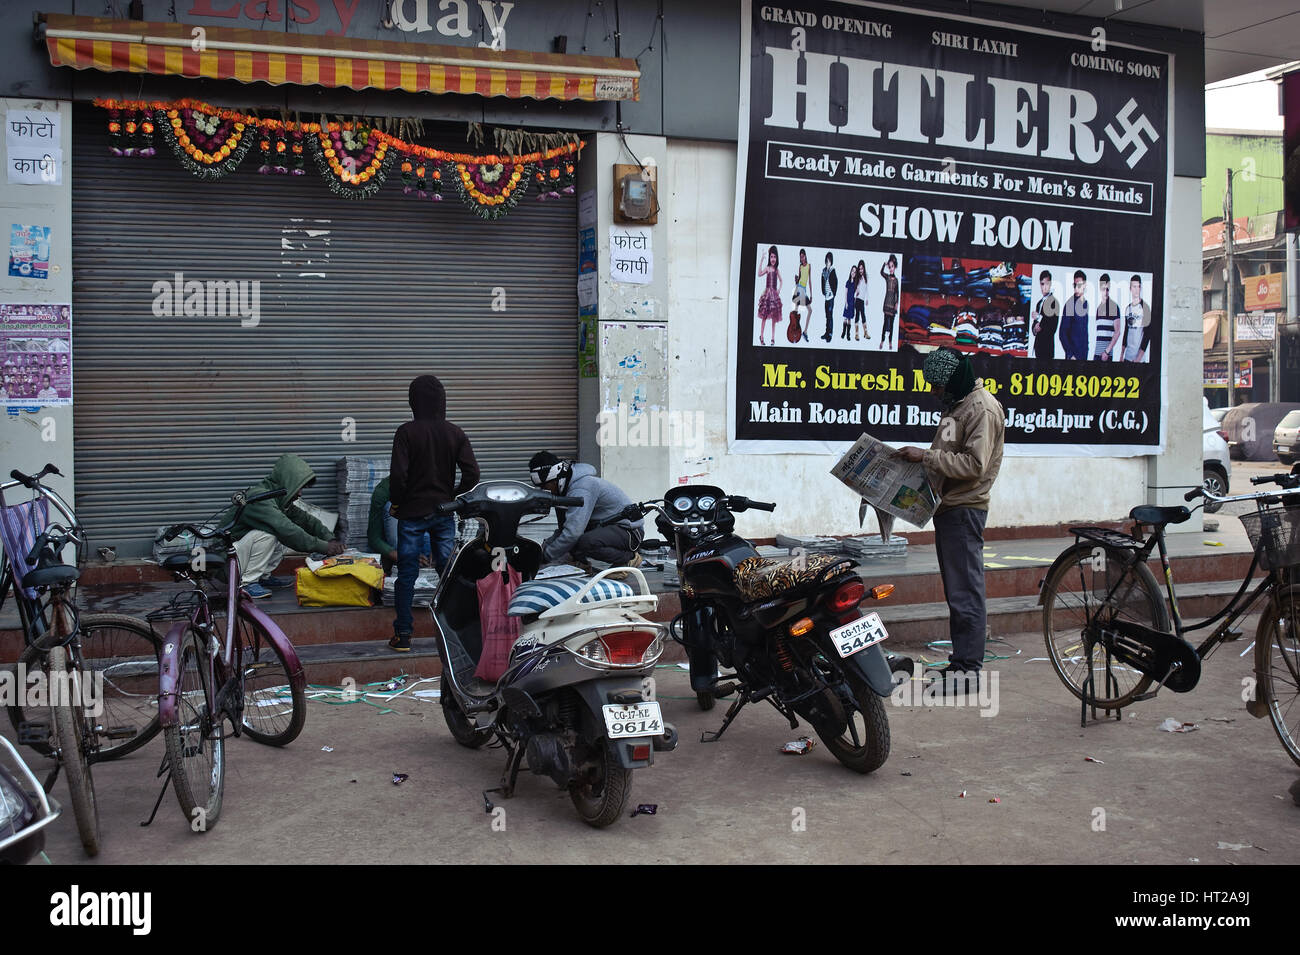 Garment shop called Hitler ( India) Stock Photo